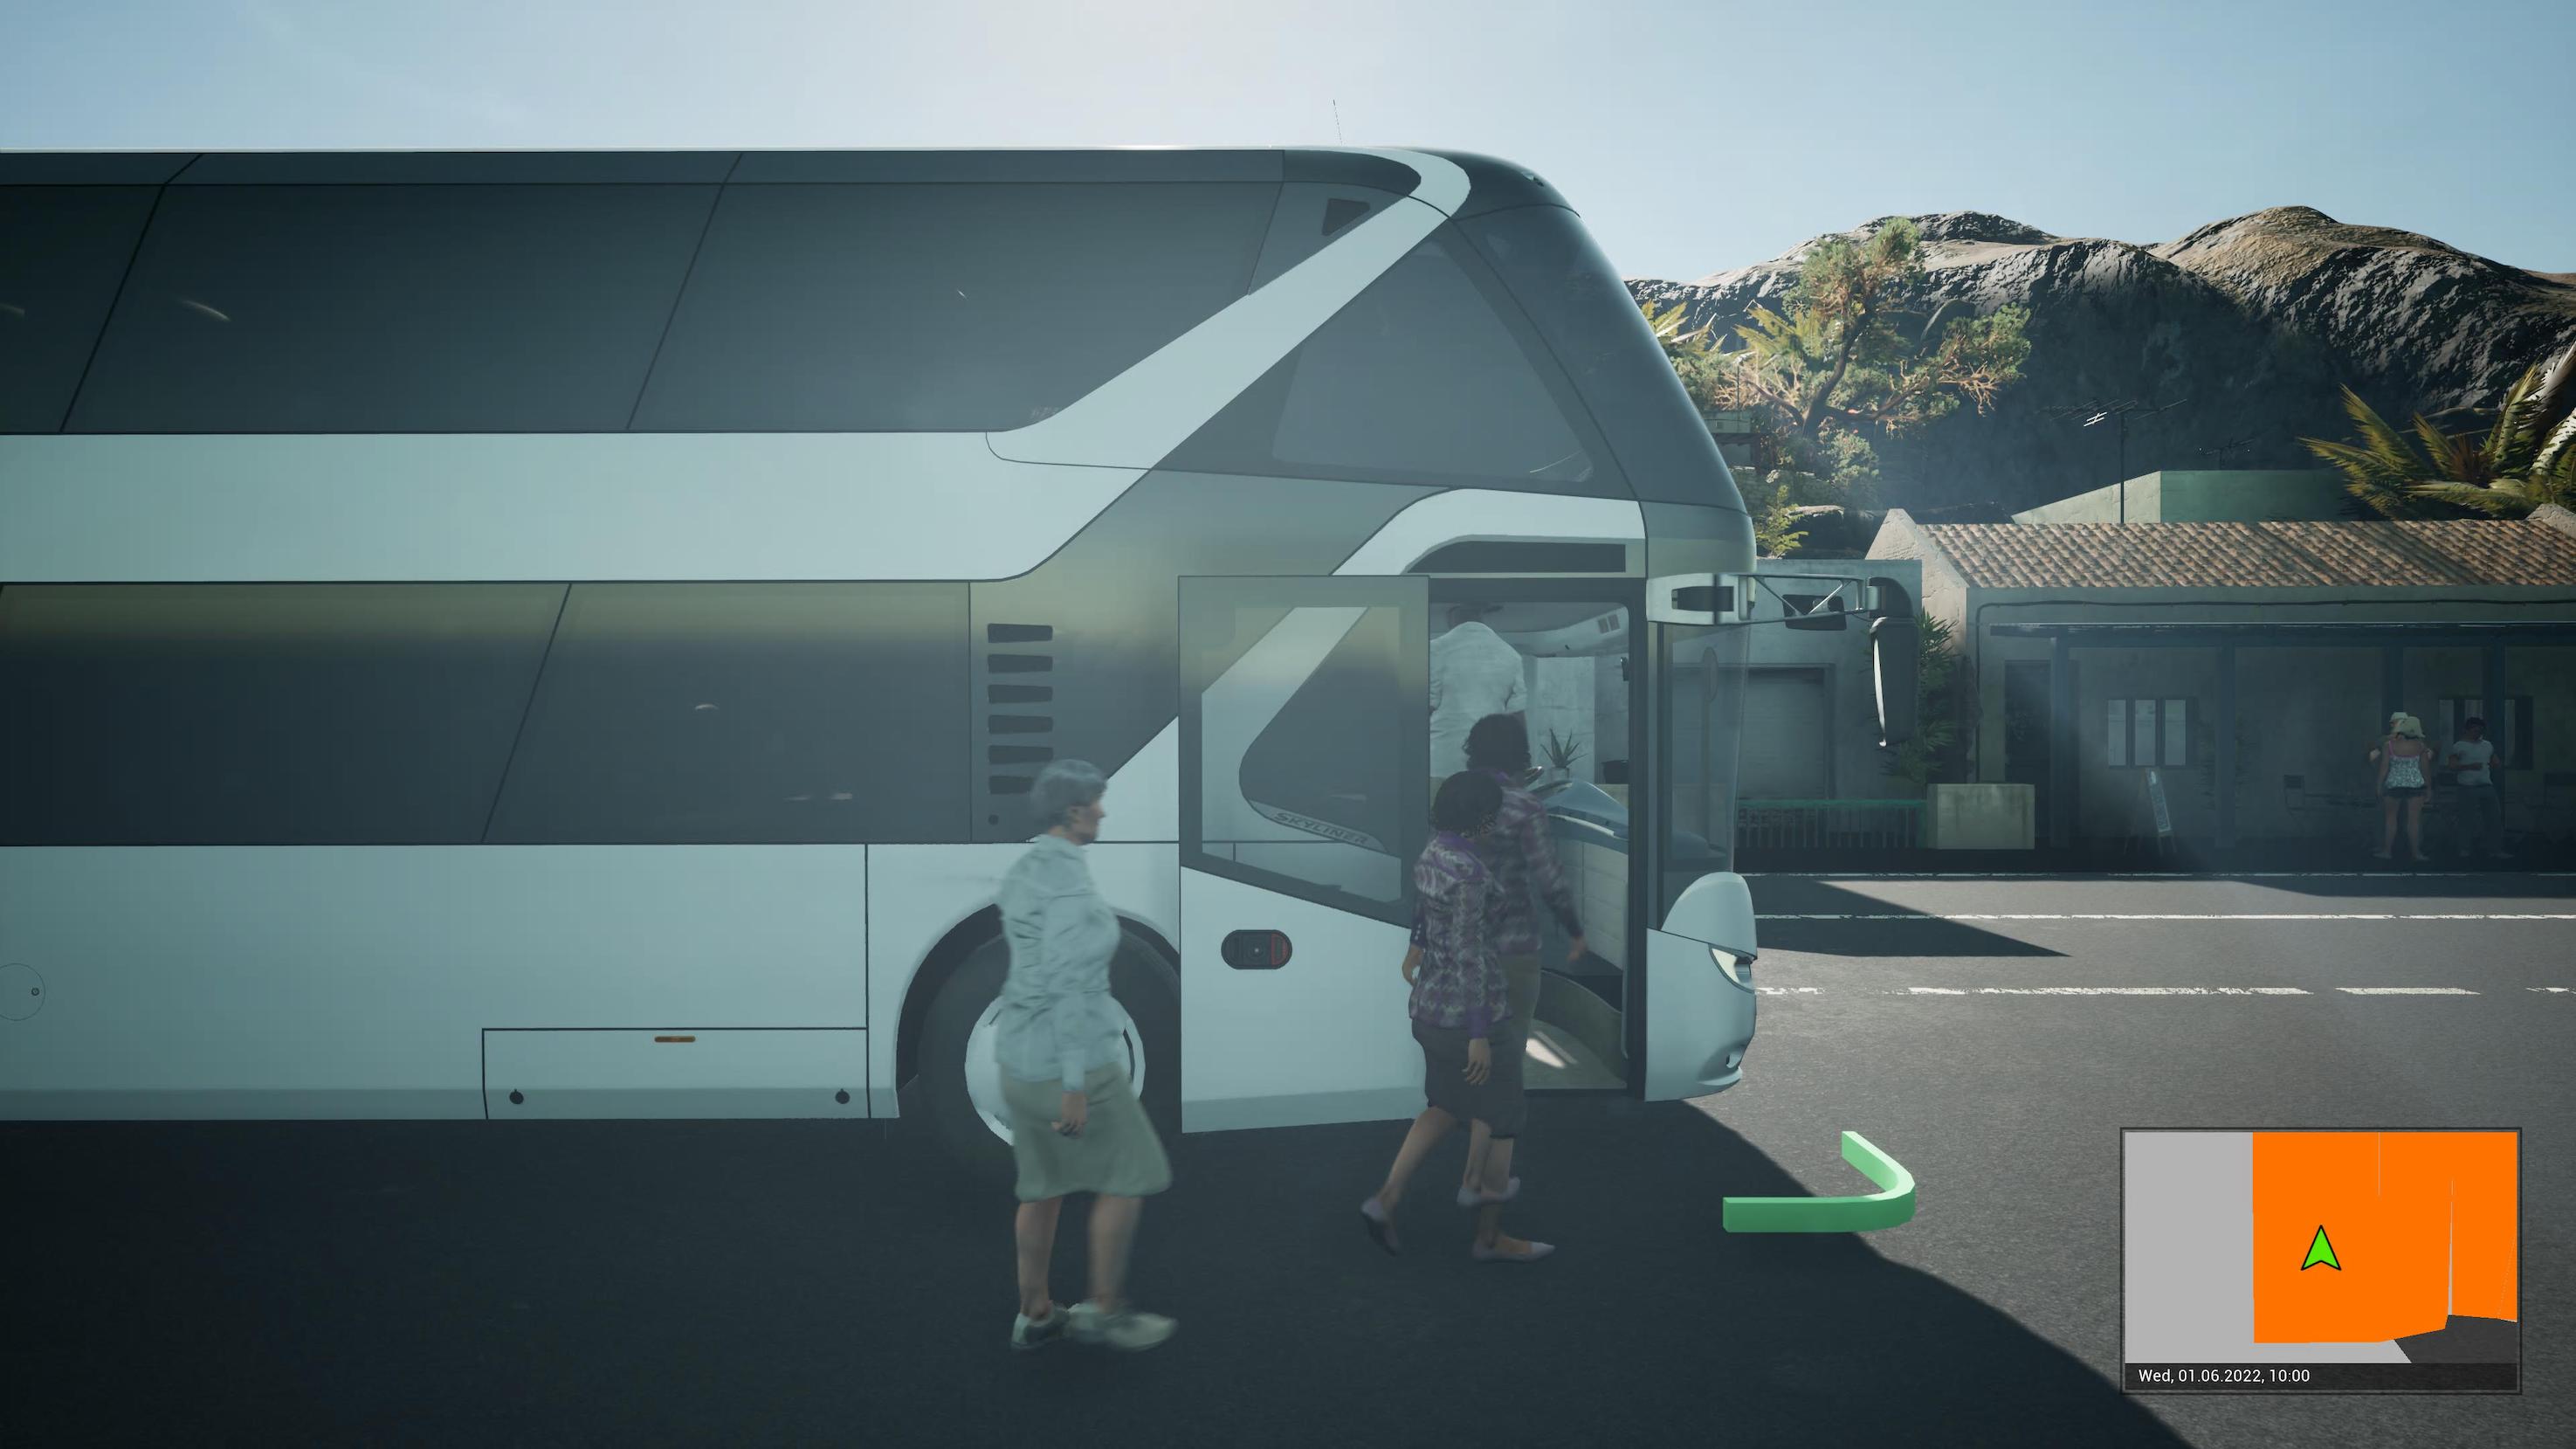 Come (PS5): Bus - Tourist Making Simulator autoevolution True a Childhood Dream Review